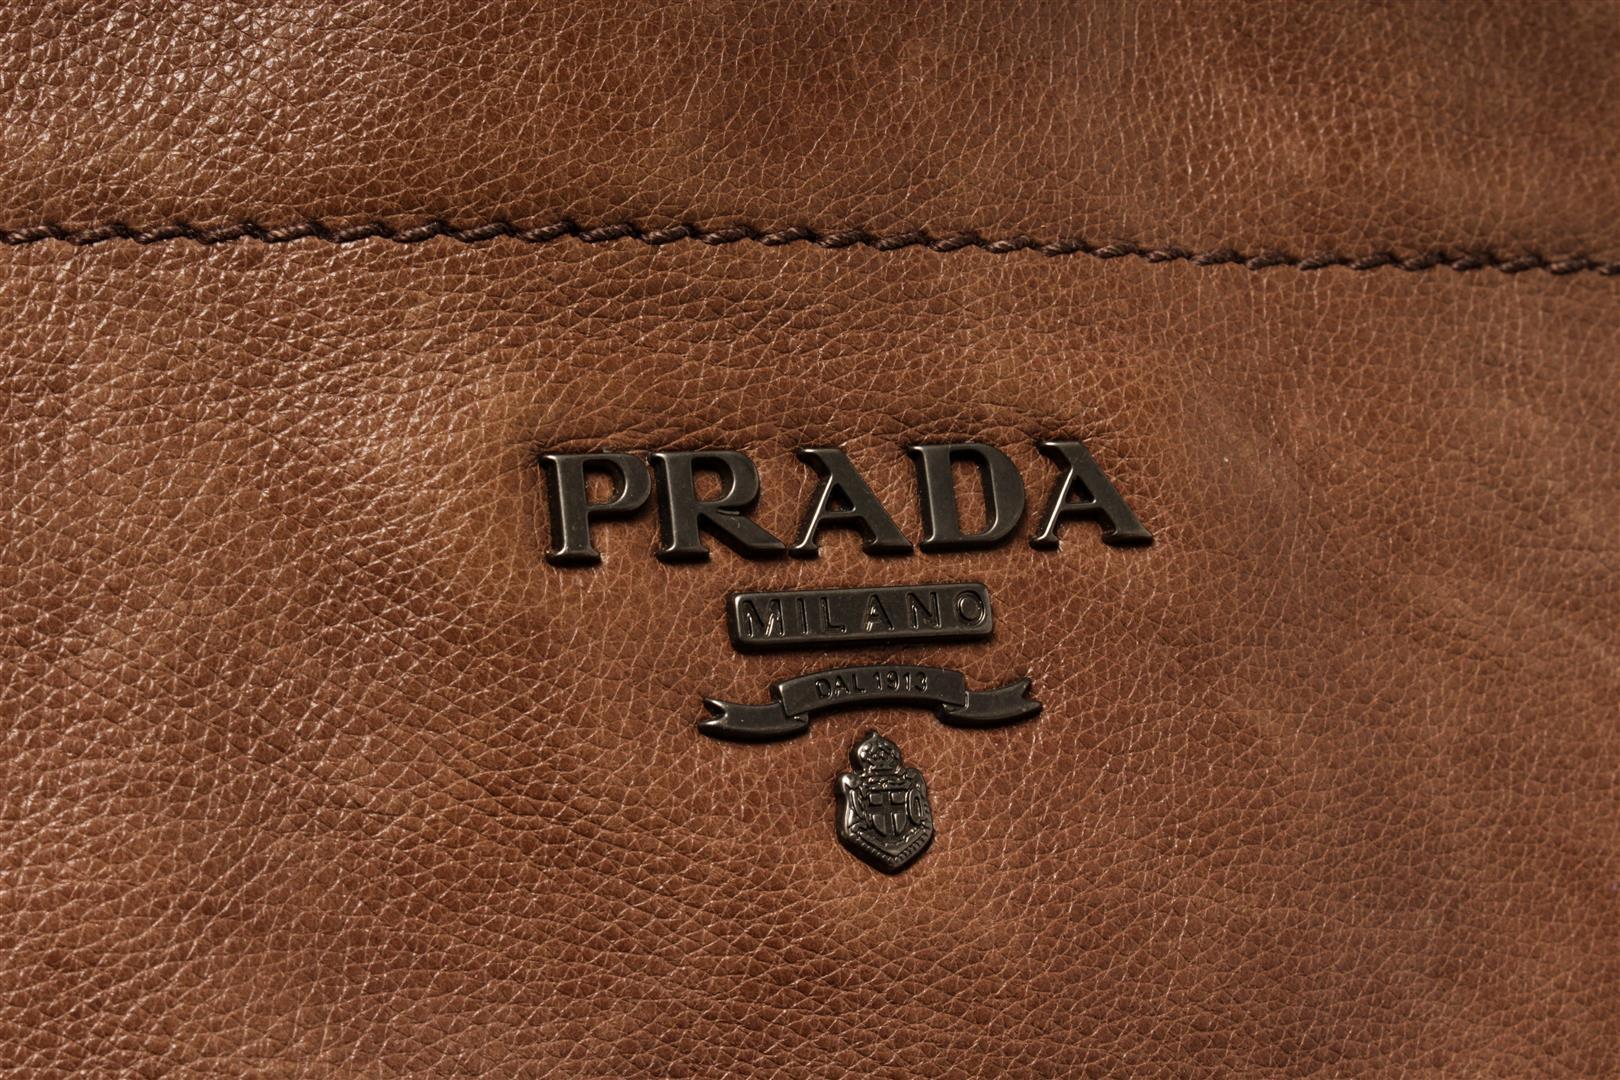 Prada Brown Leather 2 Way Shoulder Bag